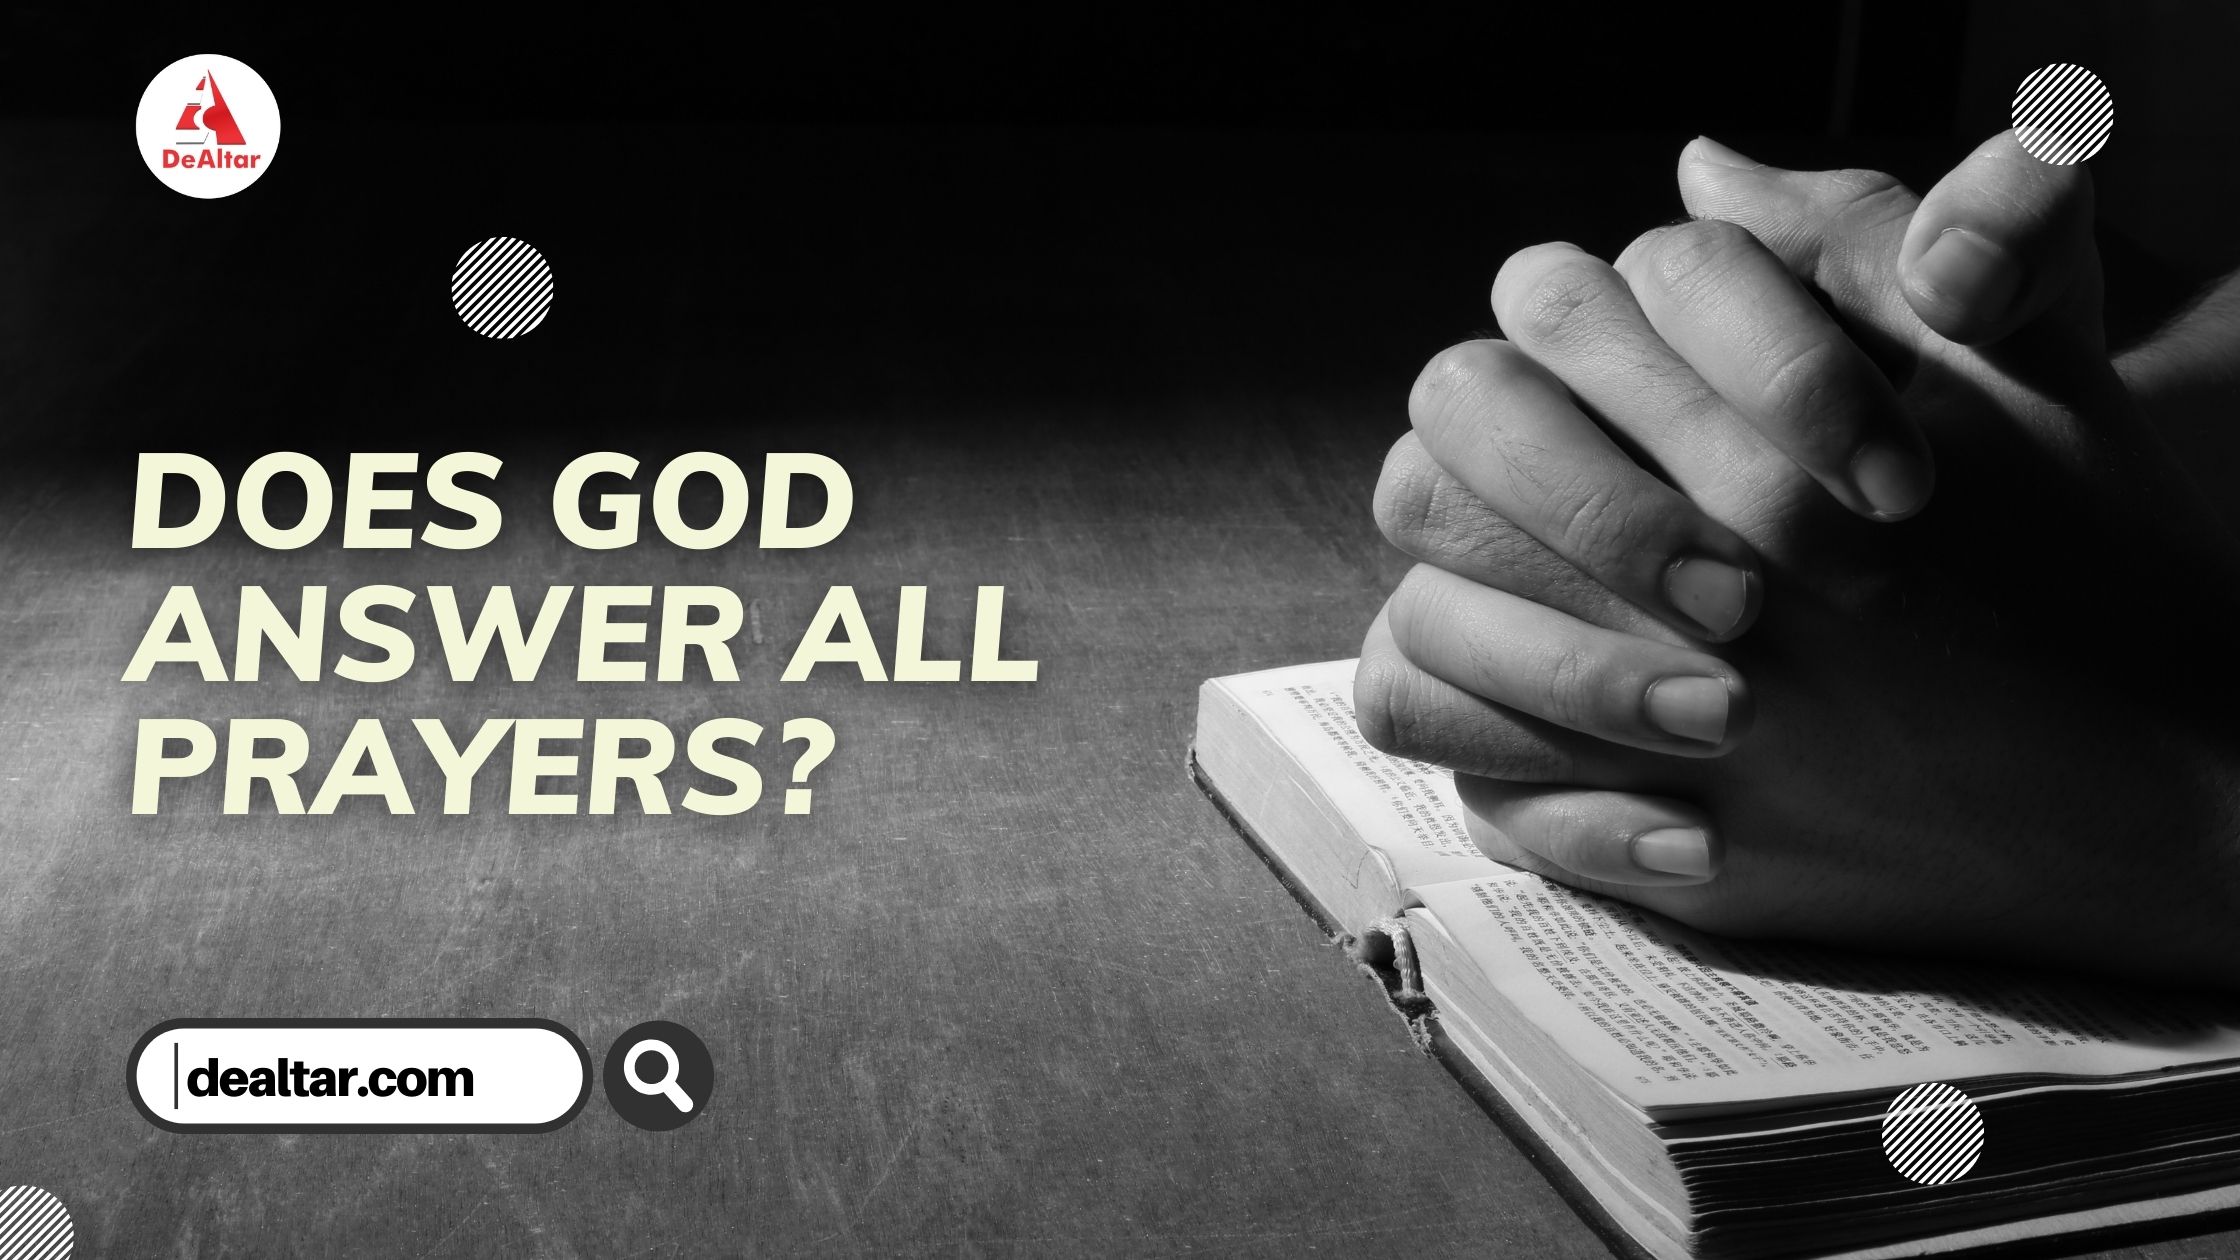 Does God Answer All Prayers?